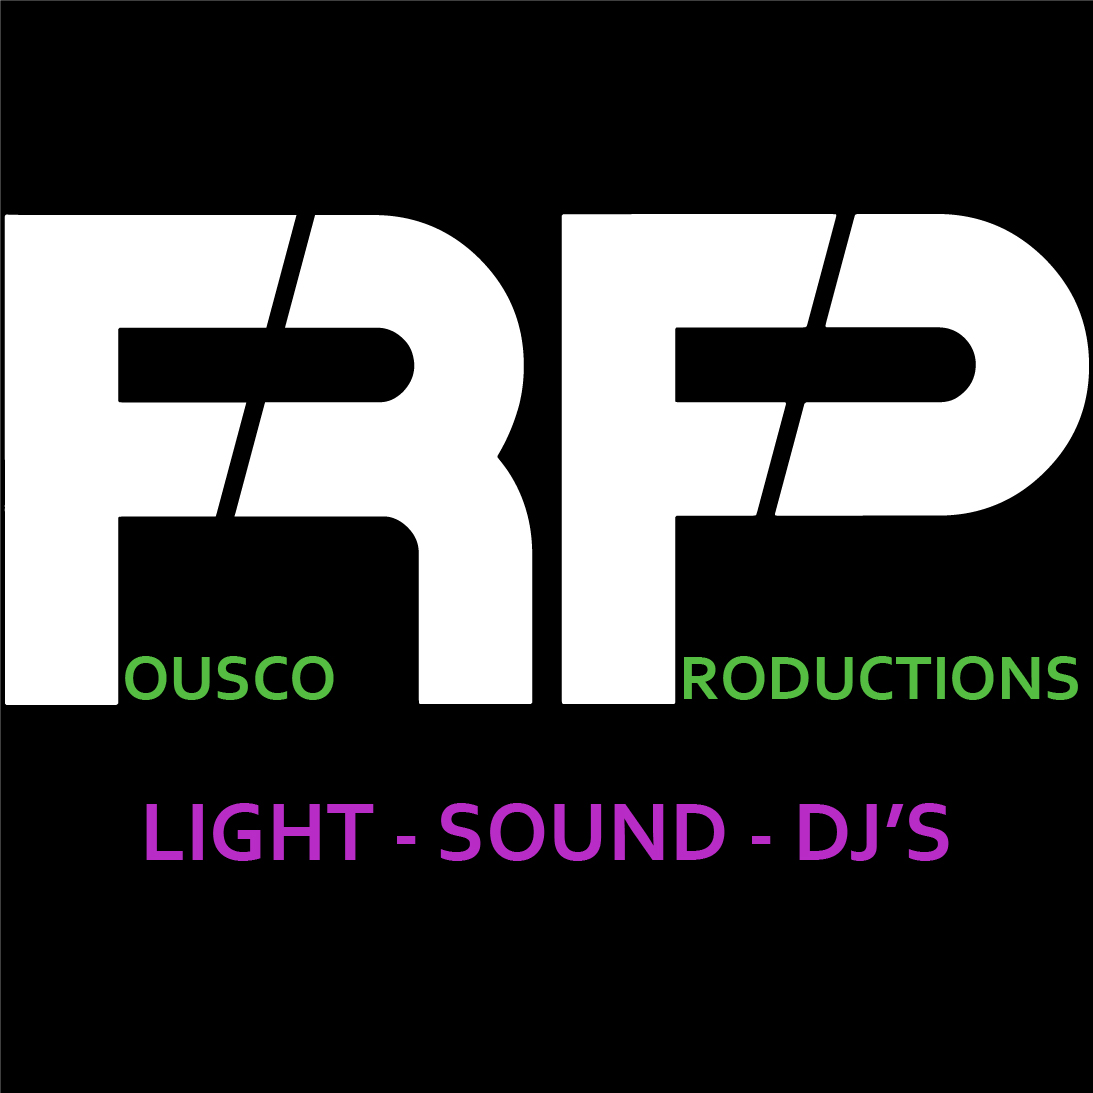 Logo Rousco Productions